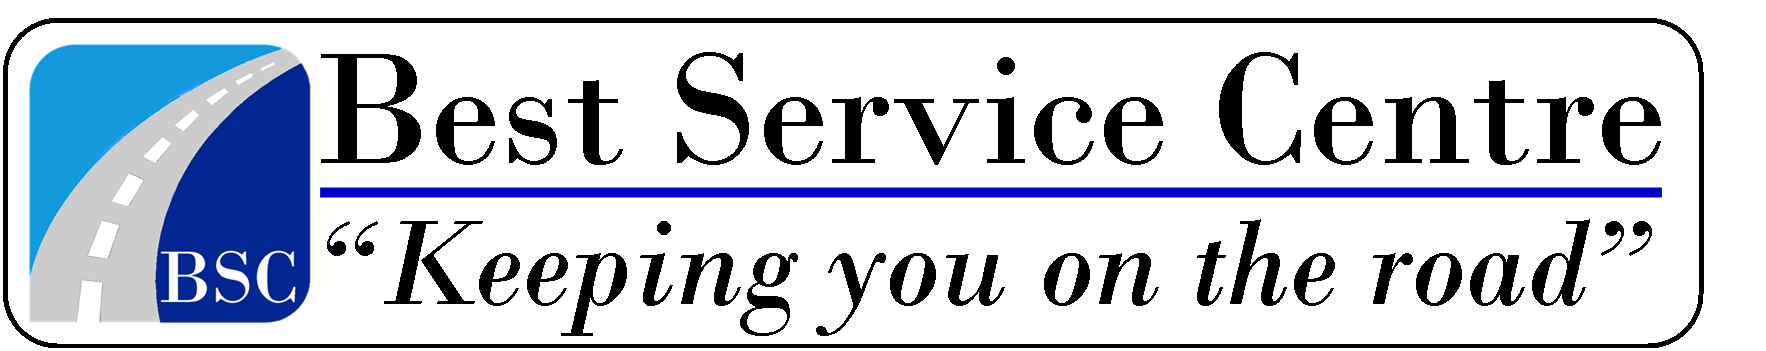 {{ site.data.general.garagename }} logo